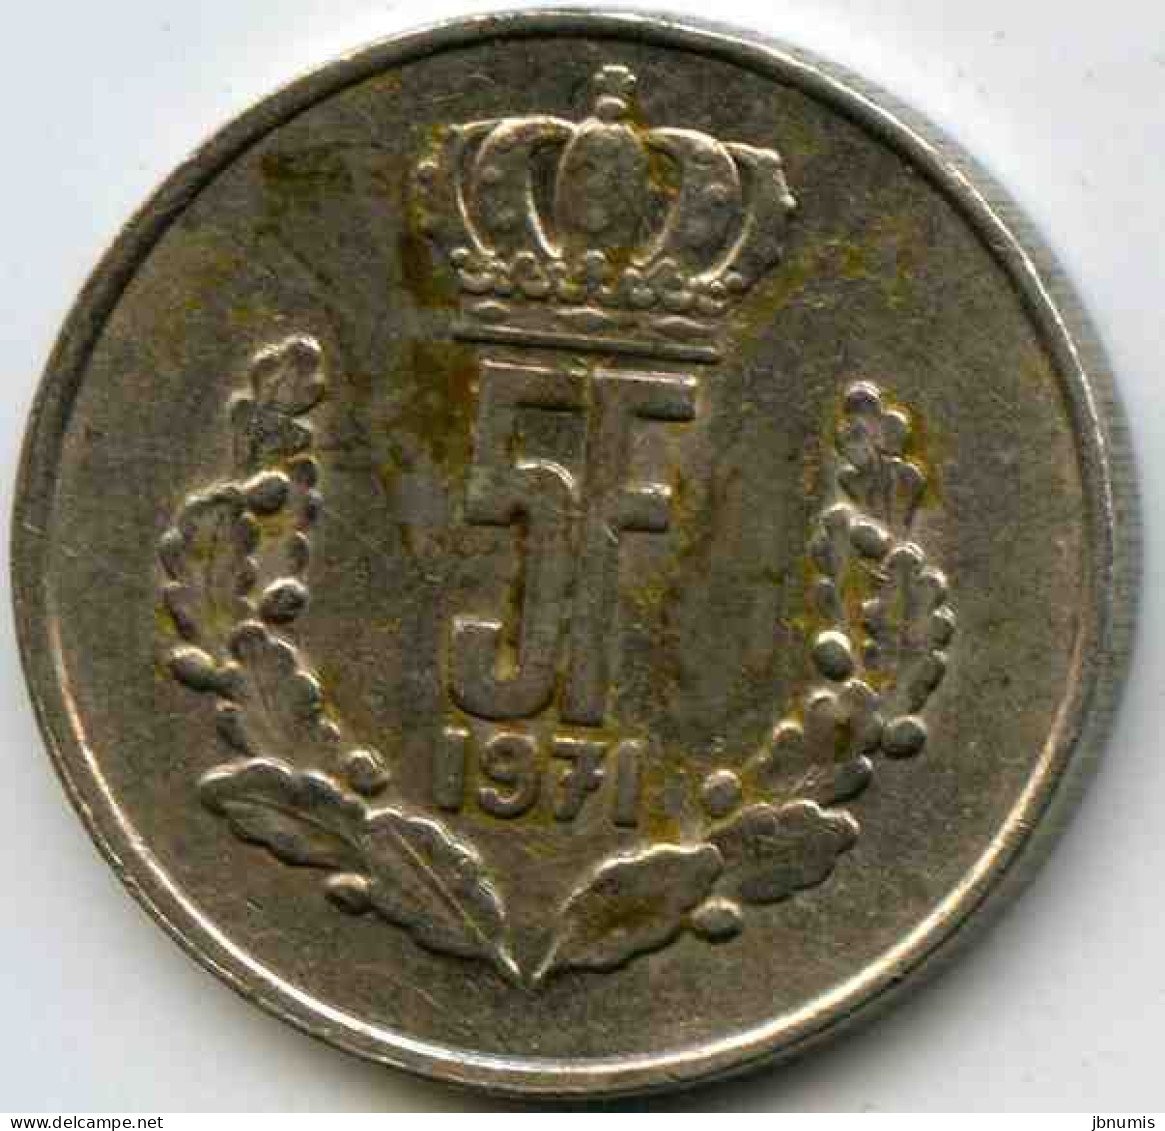 Luxembourg 5 Francs 1971 KM 56 - Luxemburg